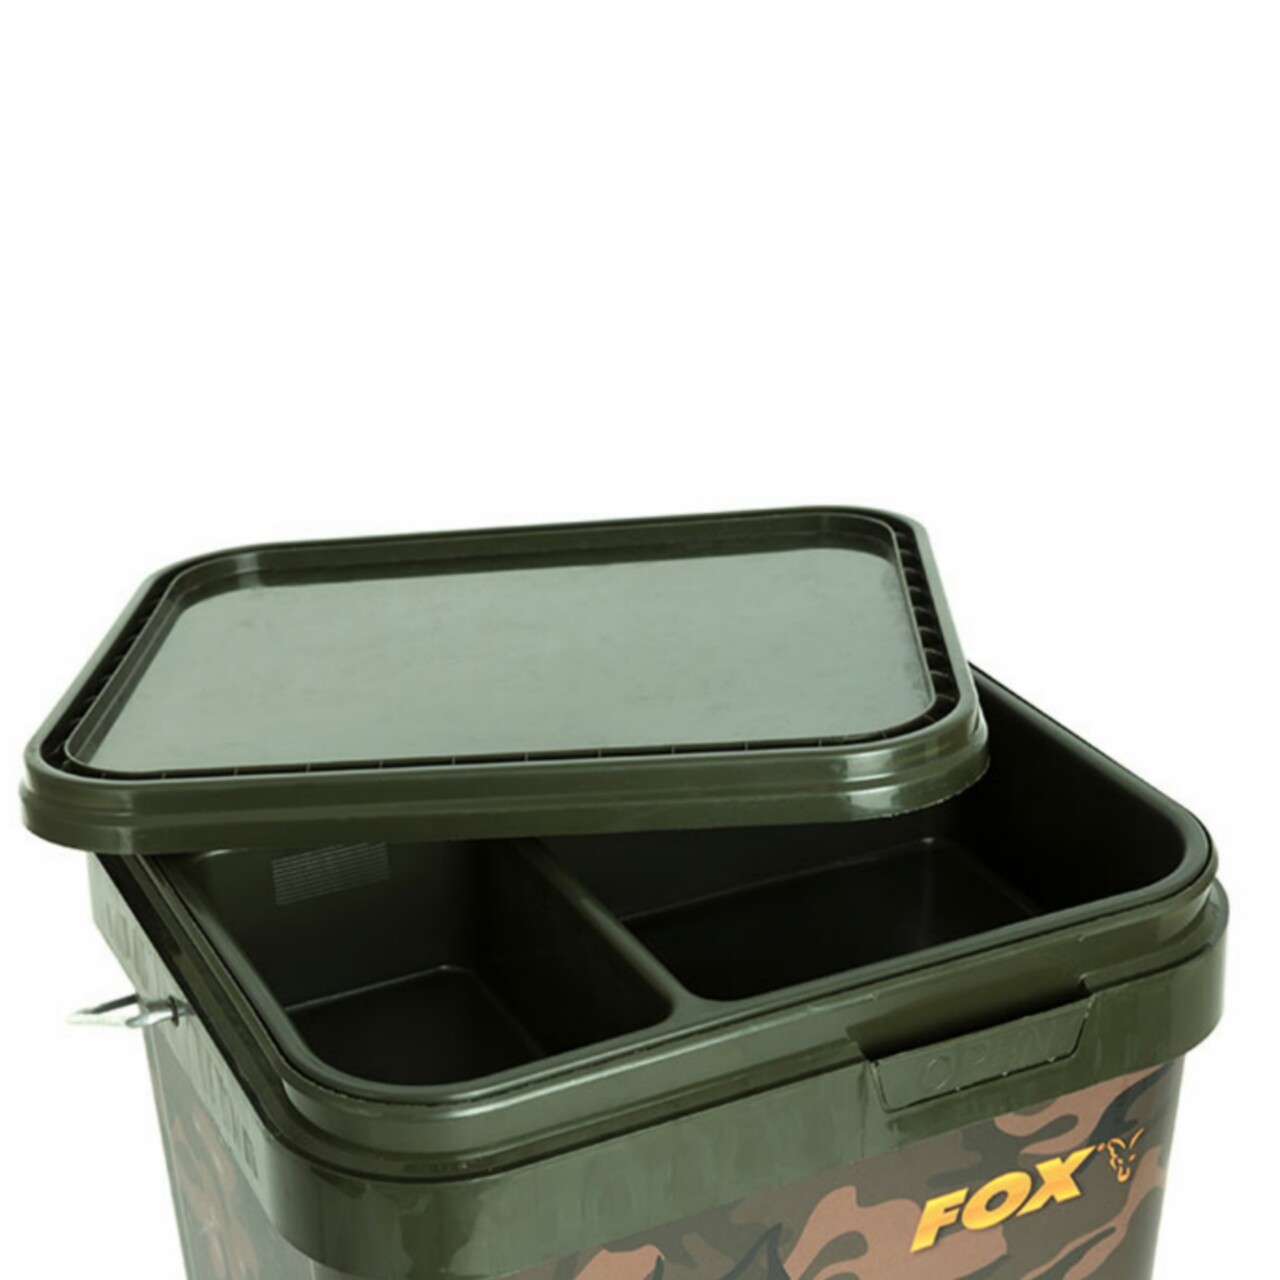 Fishing New 2020 Fox Cuvette Tray Green Ideal to fit Fox Spomb 17l buckets 